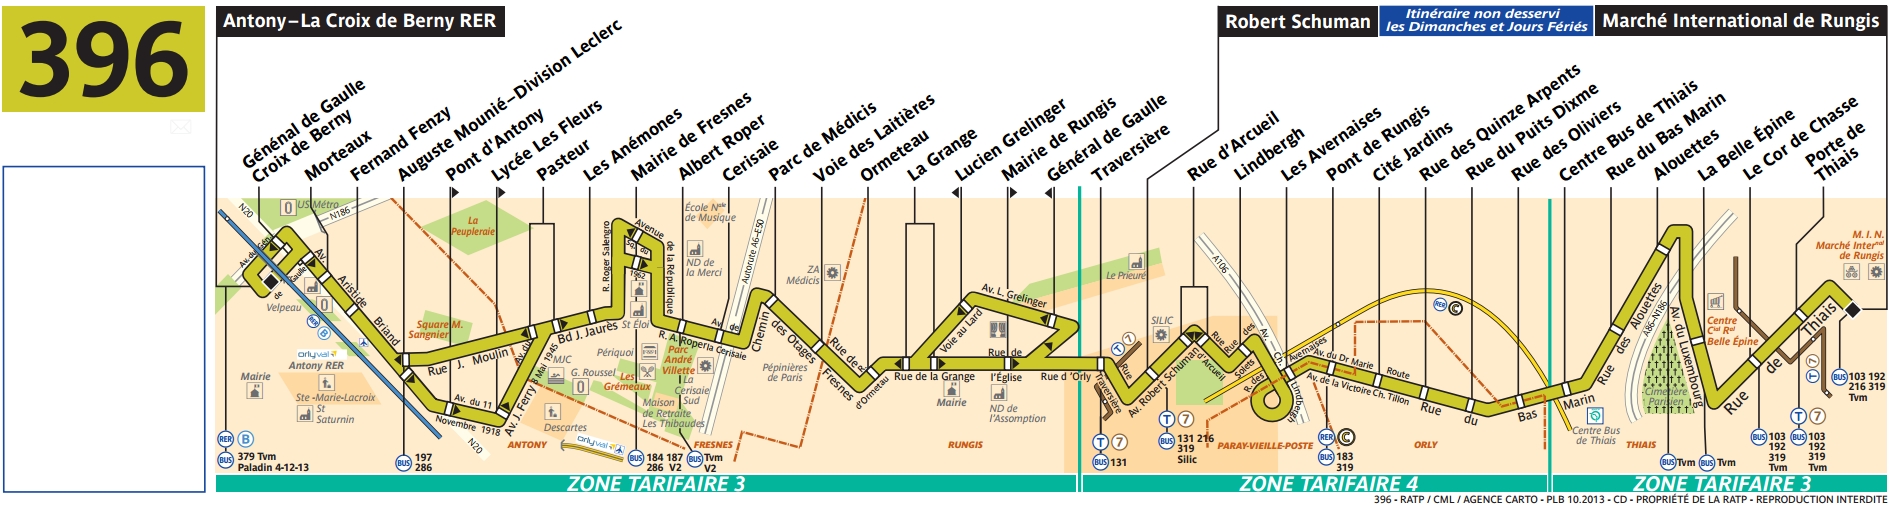 Plan bus Ligne 396